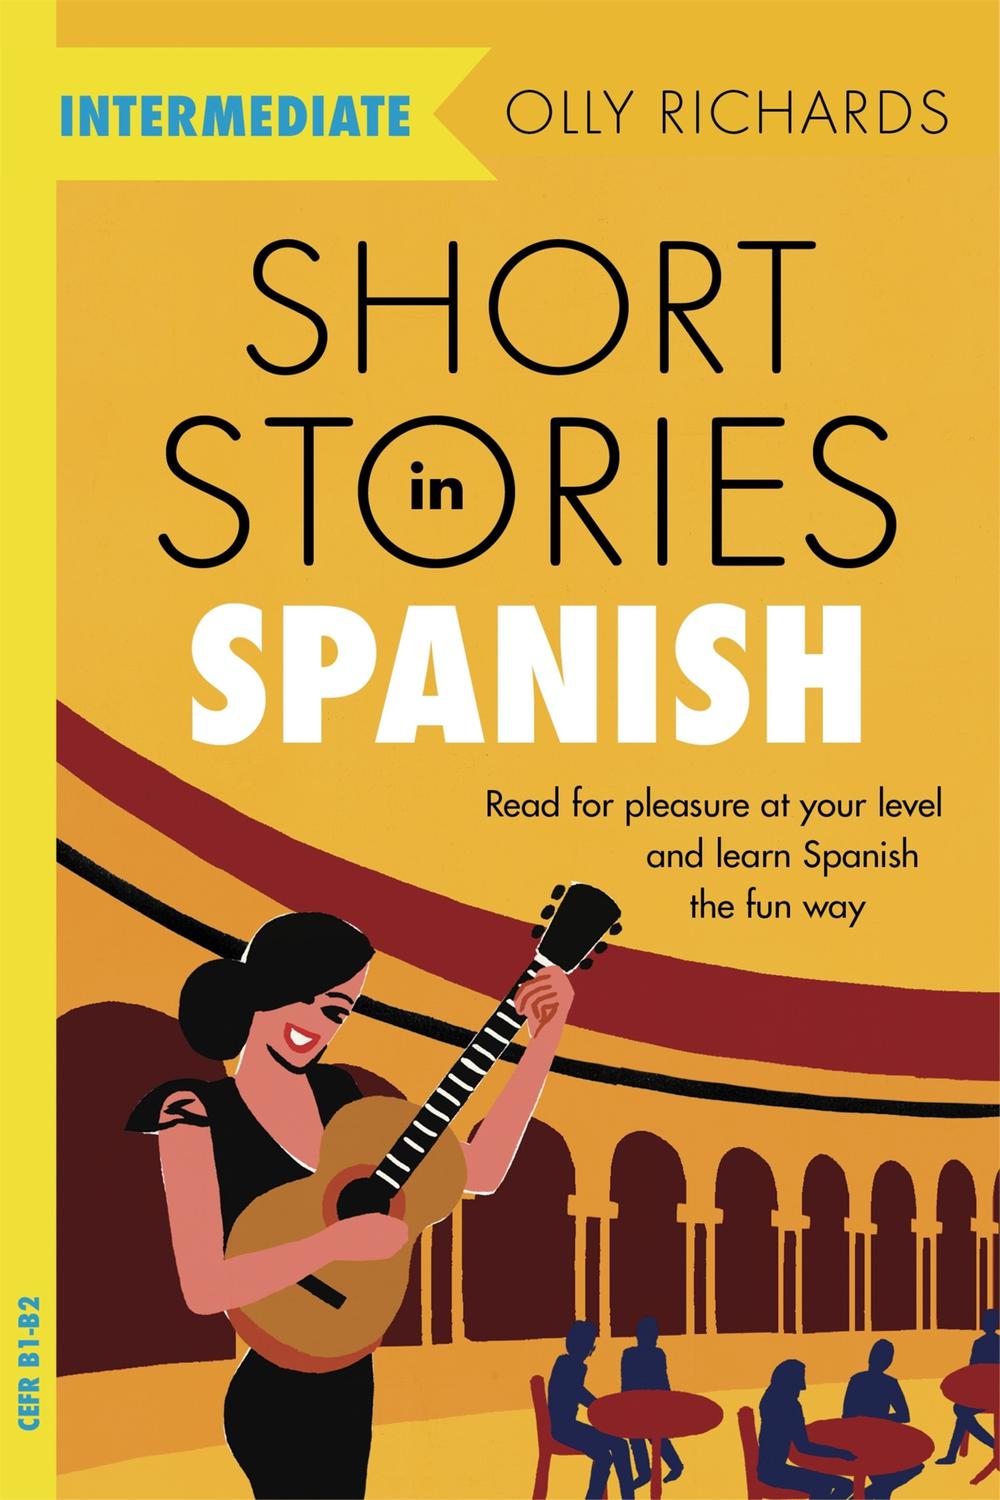 PDF] Stories in Spanish Intermediate Learners by Richards eBook |